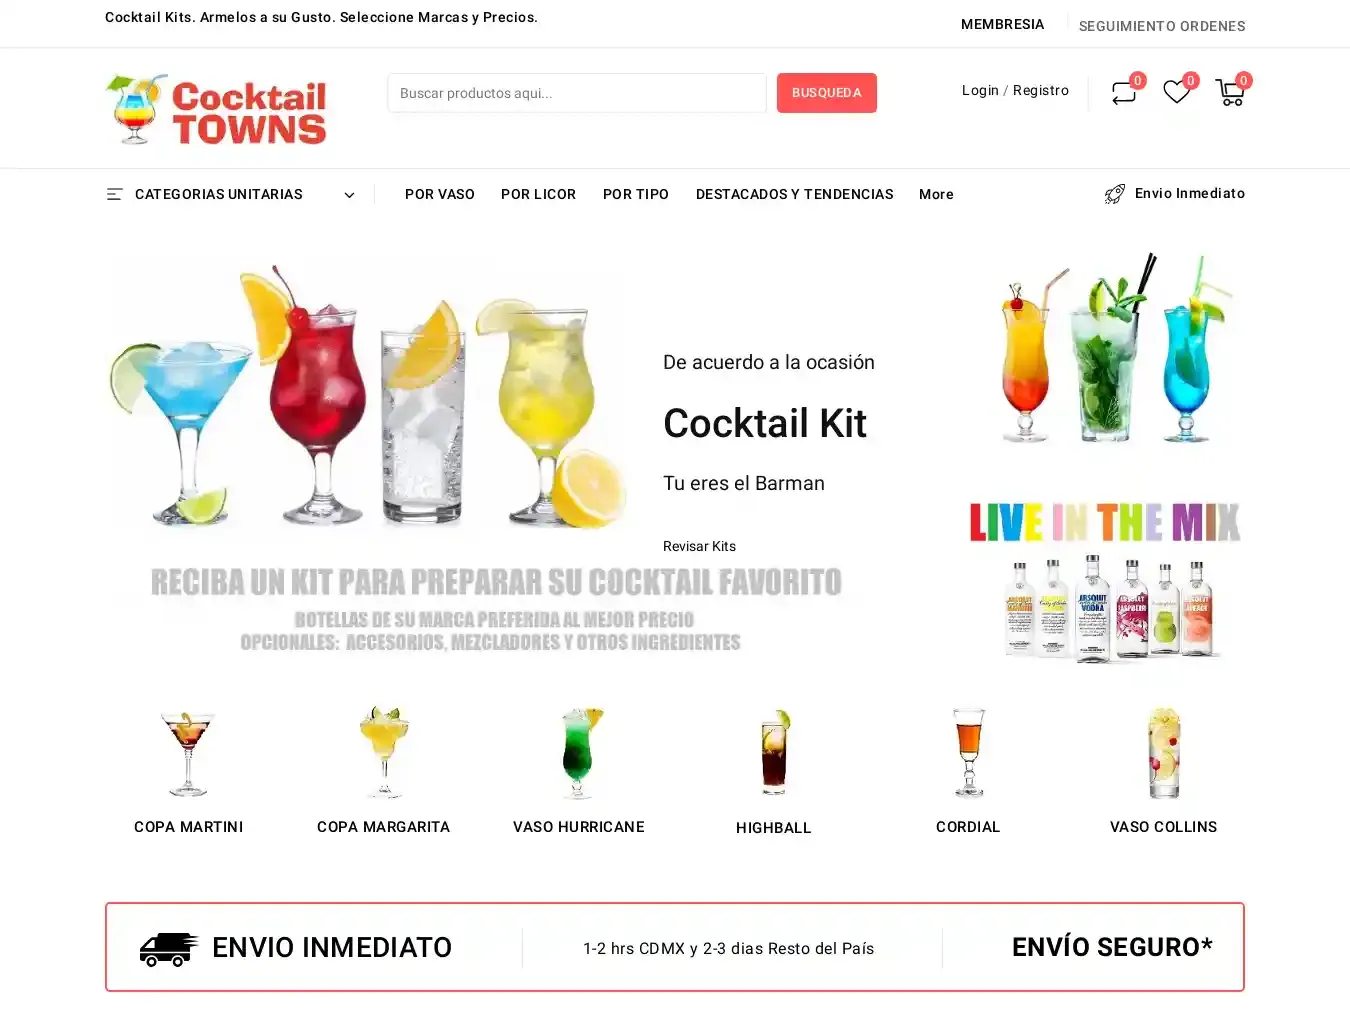 Cocktailtowns.com Fraudulent Non-Delivery website.